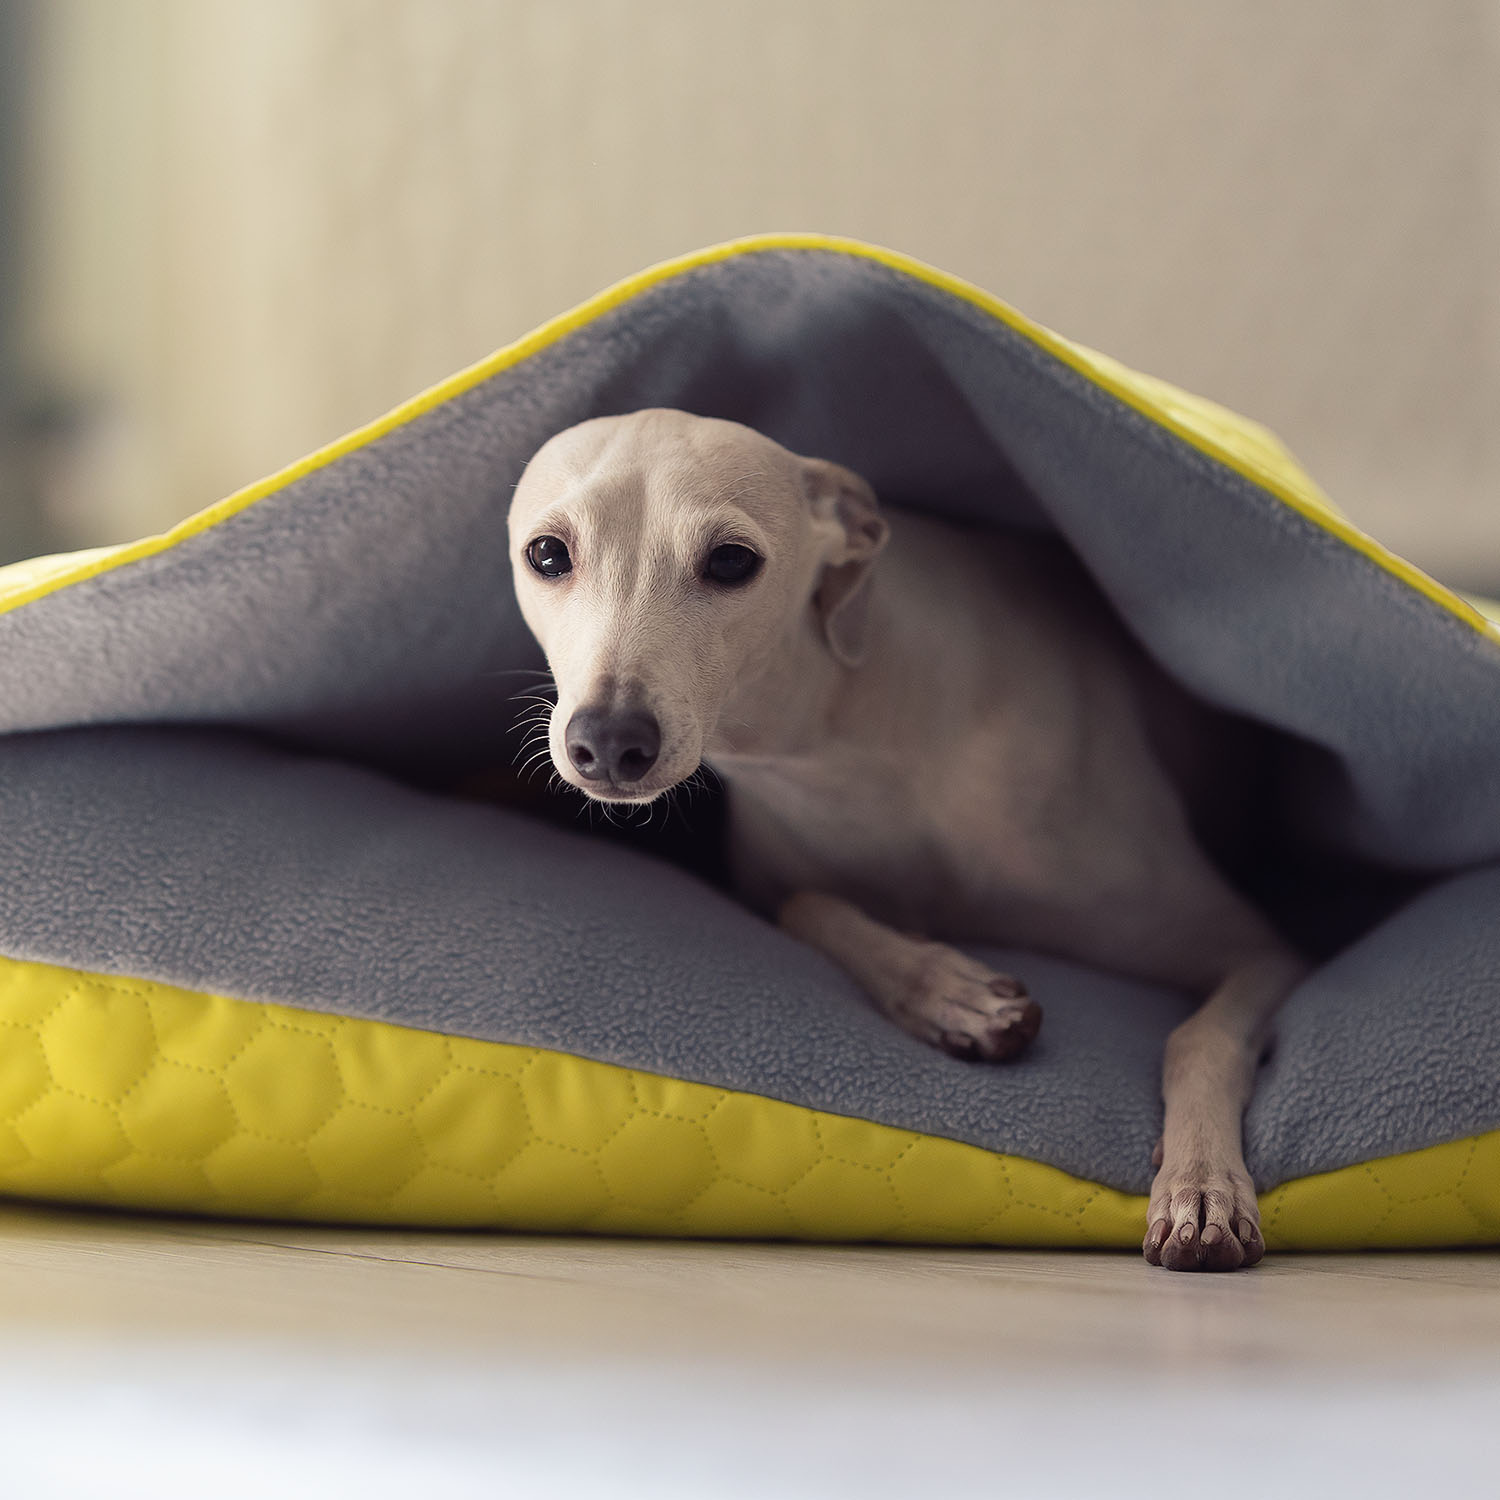 Iitalian greyhound bed Neon Yellow waterproof - Sangue Azzurro image 2